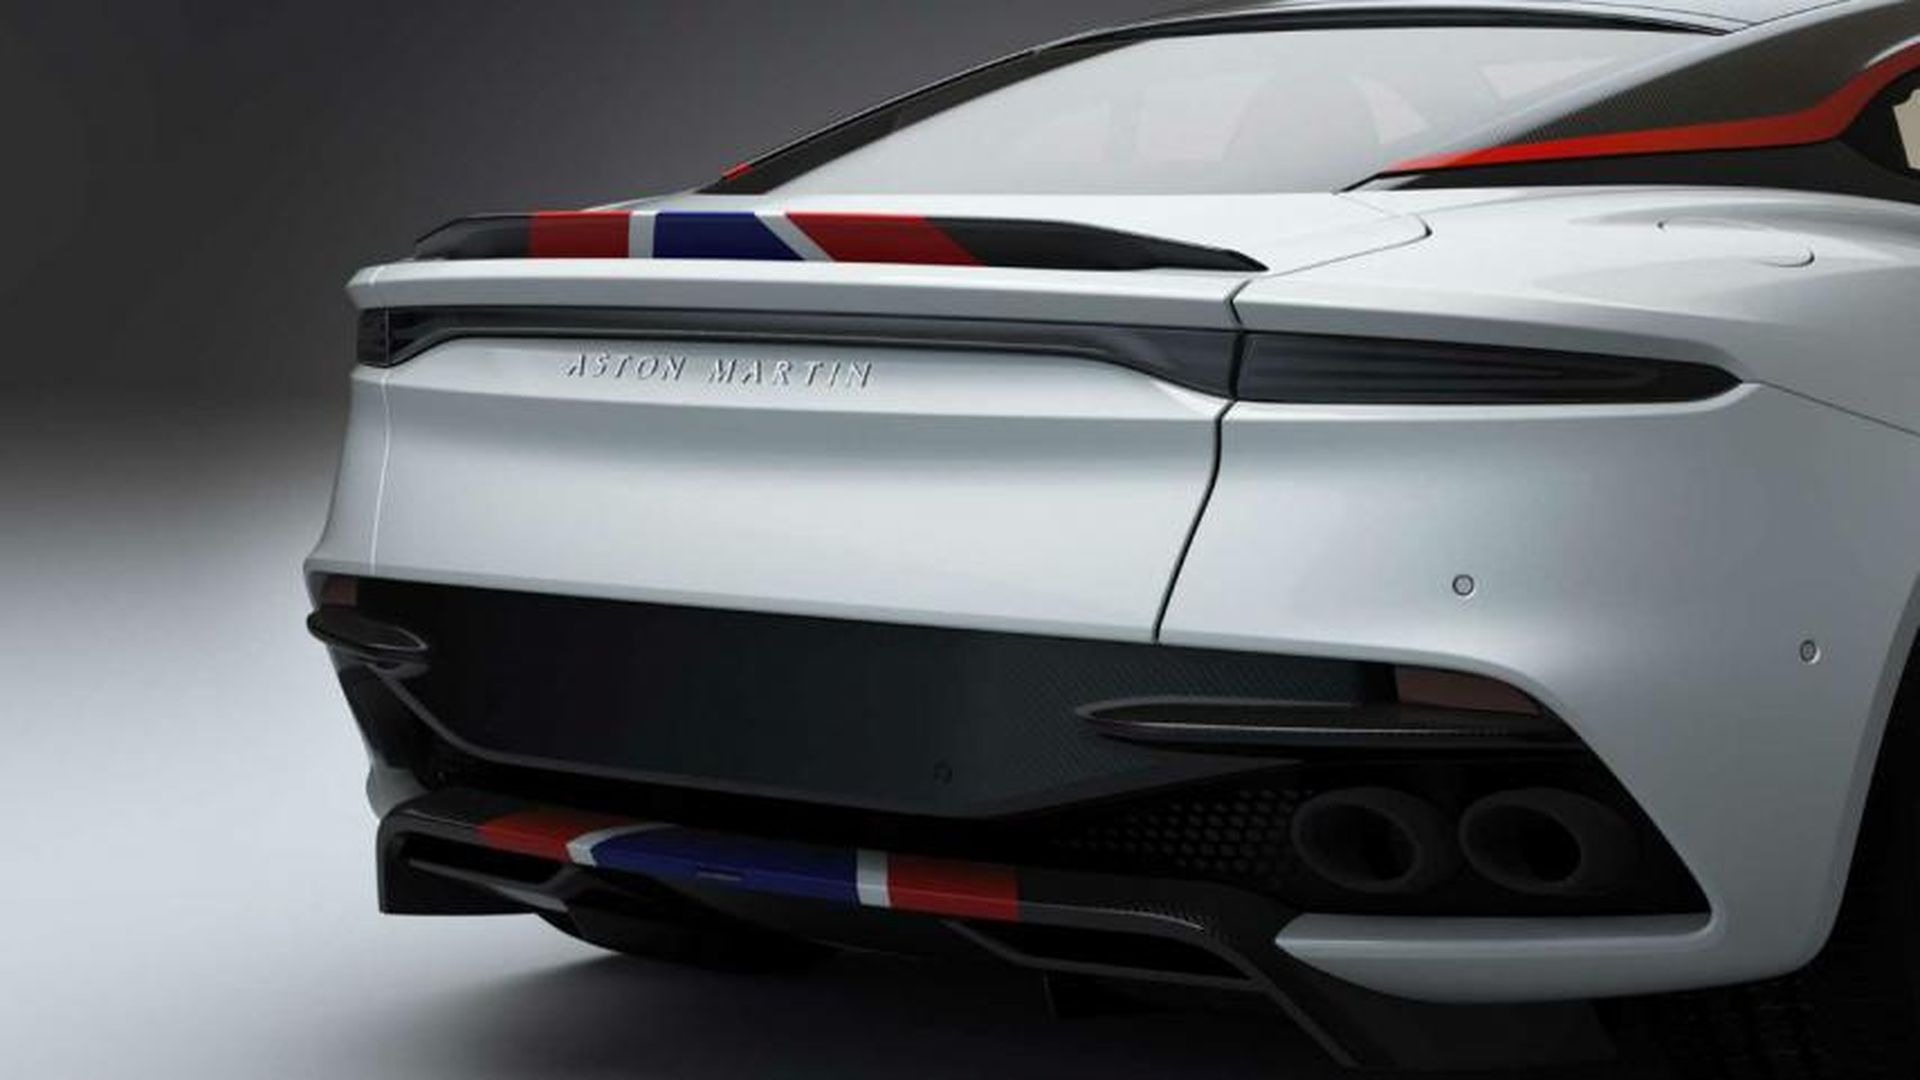 Galería: Aston Martin DBS Superleggera Concorde Edition